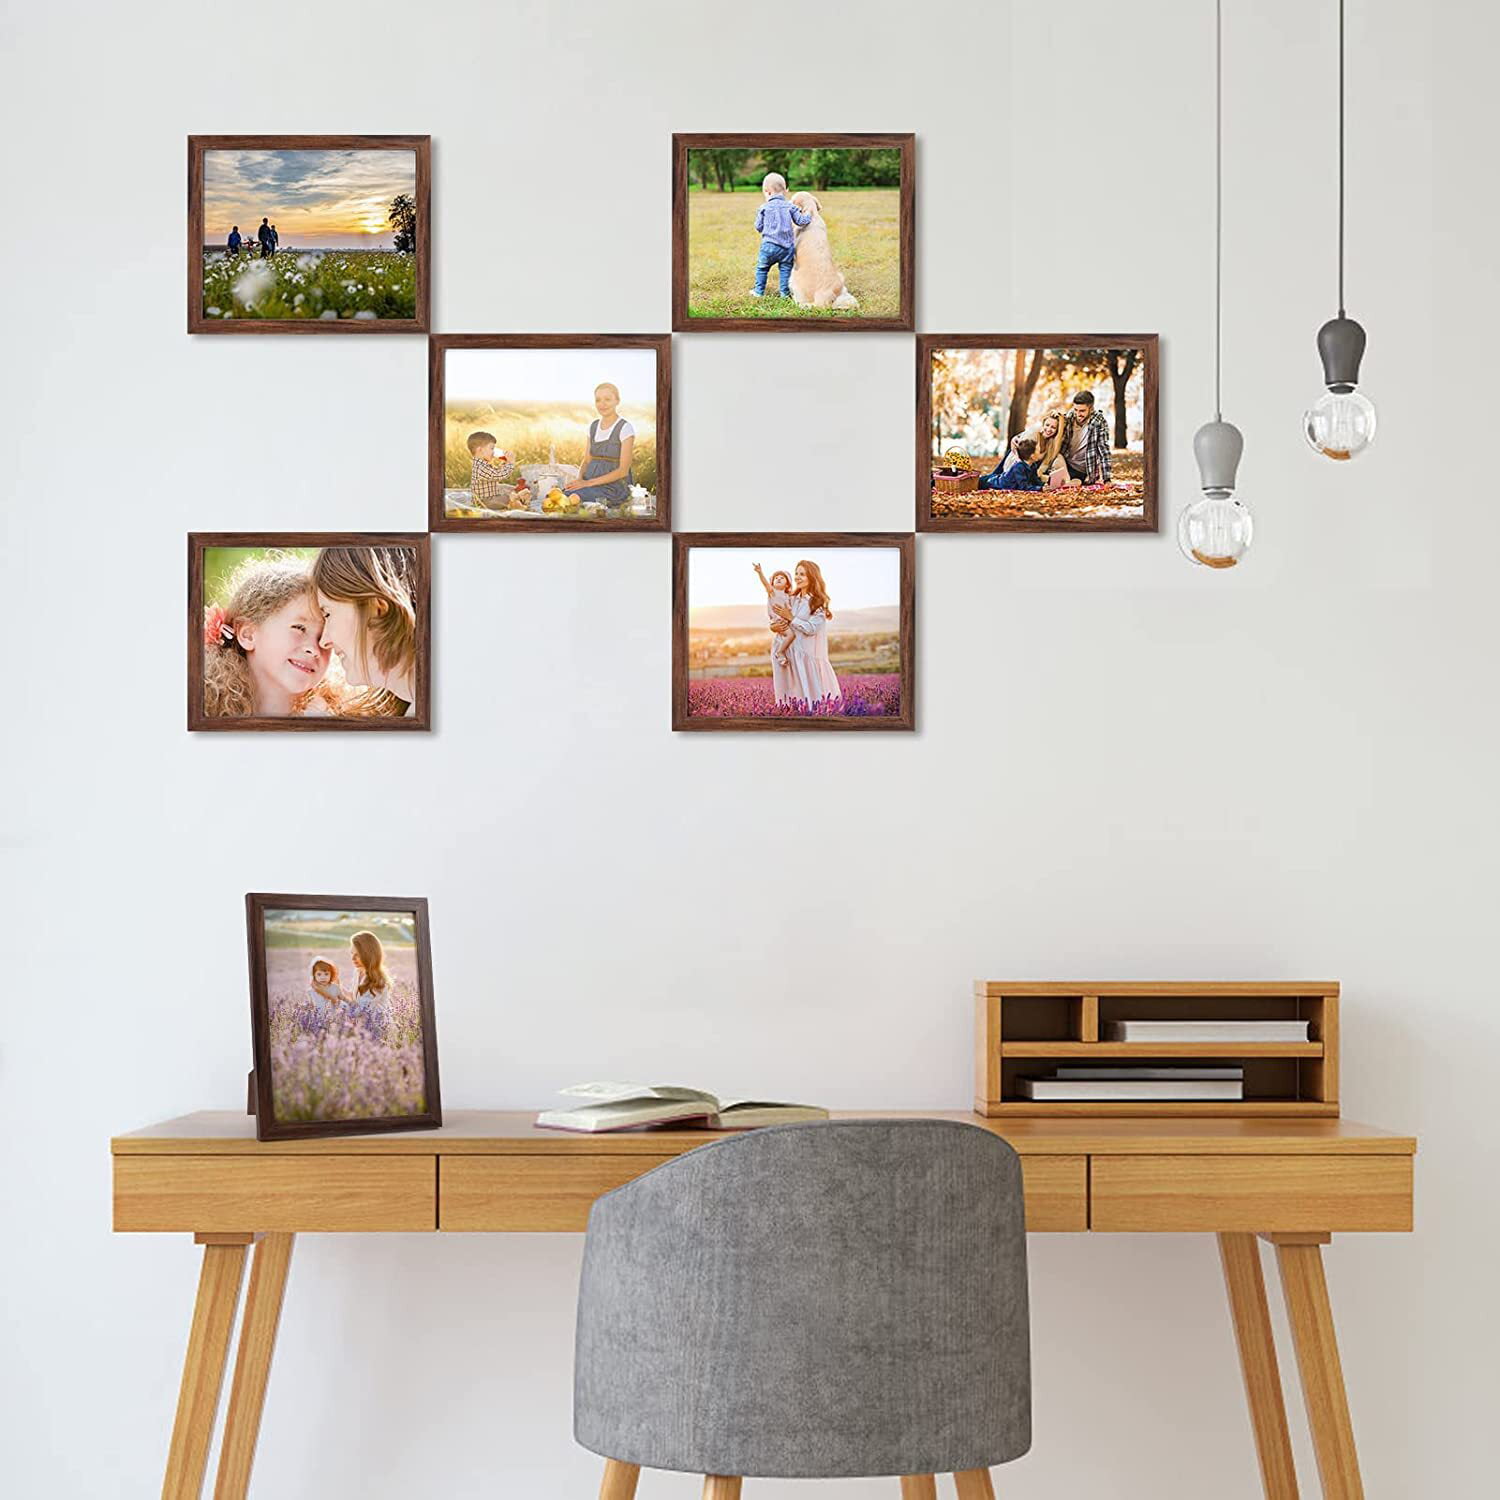 Family Dark Brown Hanging Photo Frame – Dekorspace